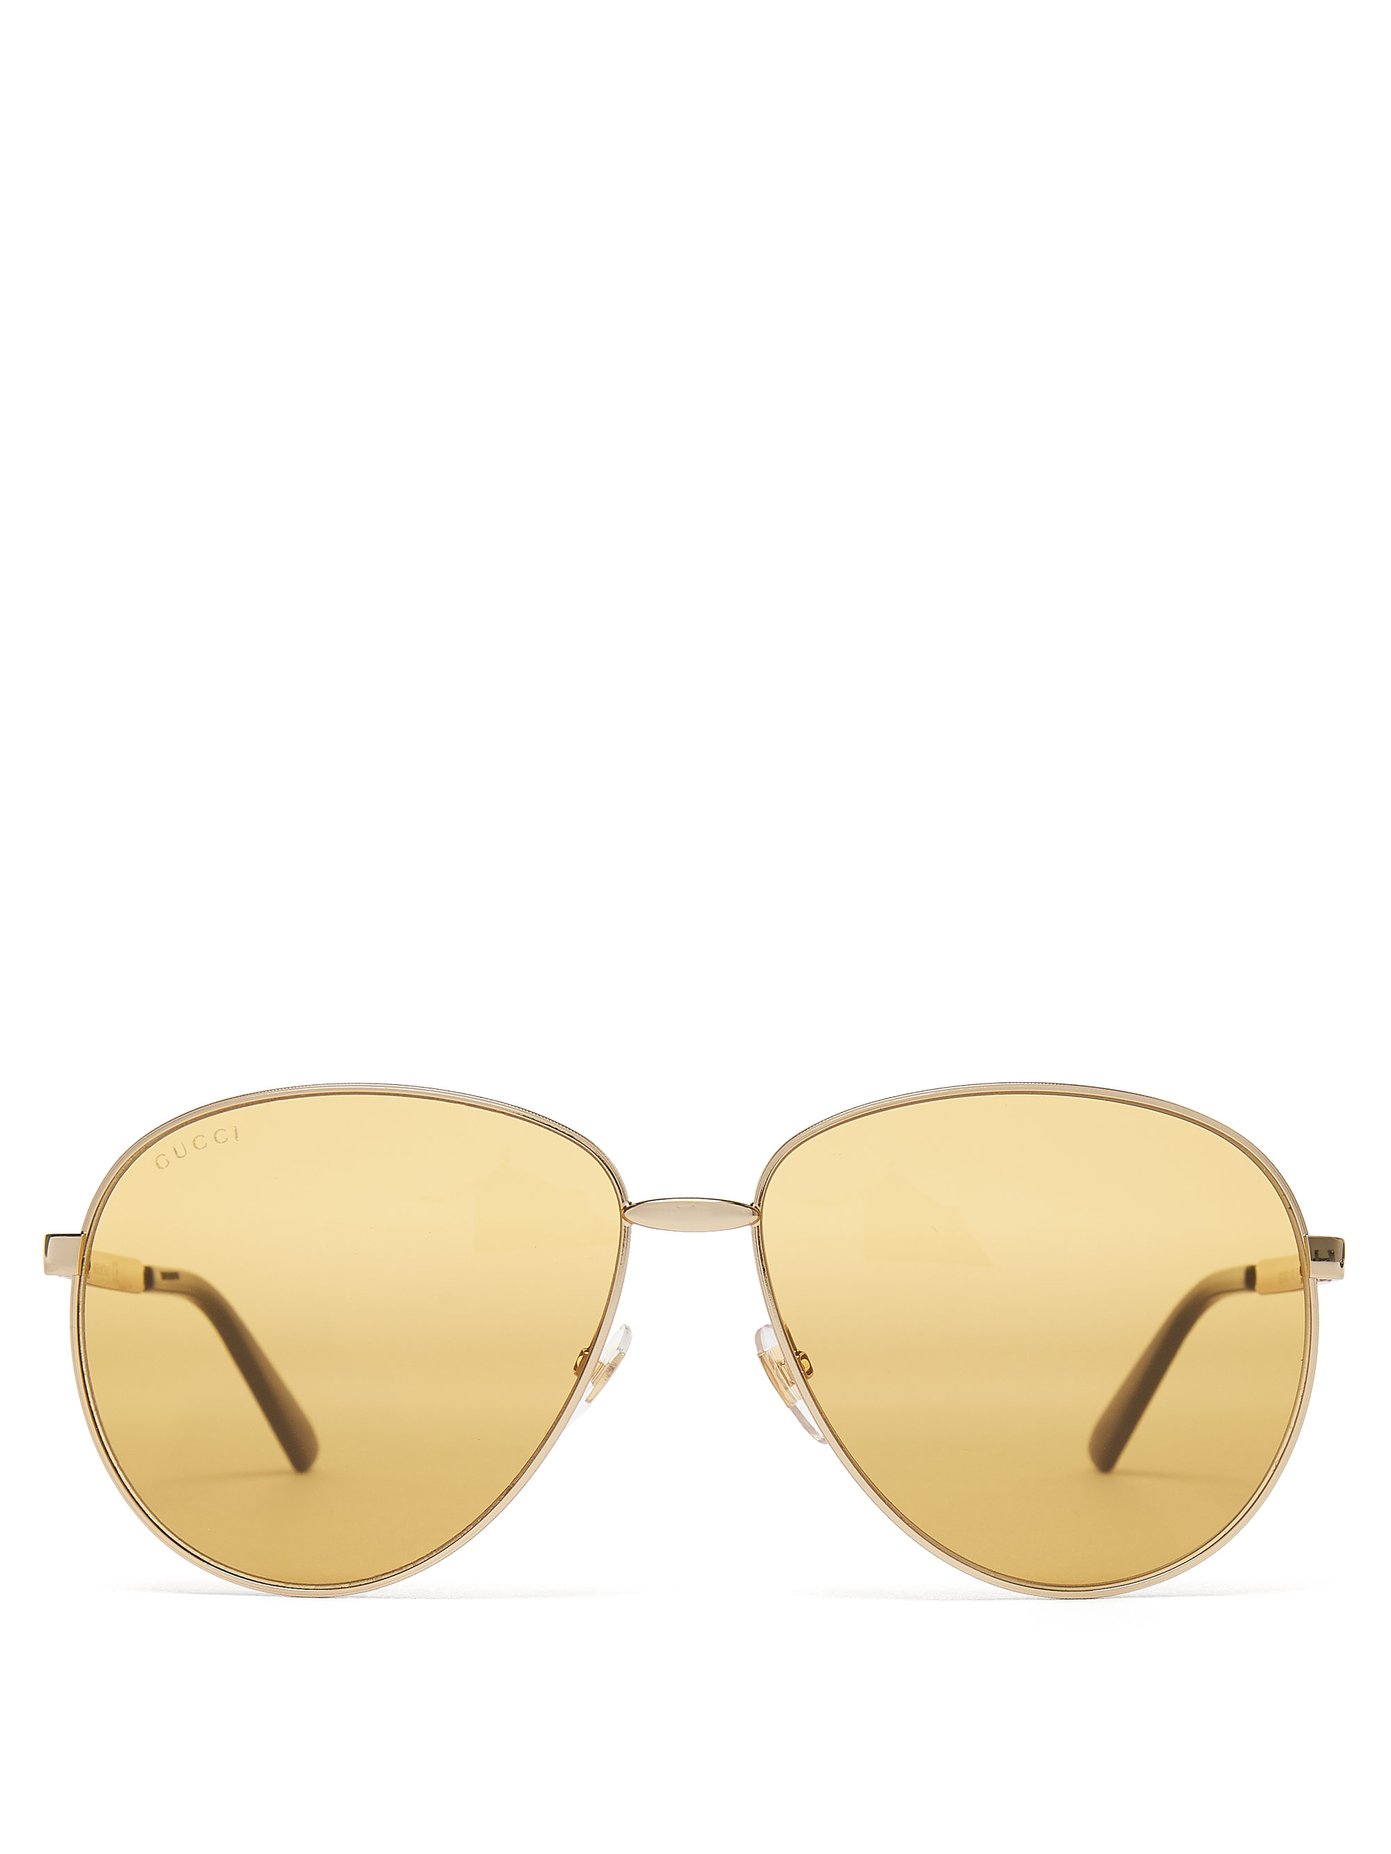 gucci aviator sunglasses yellow